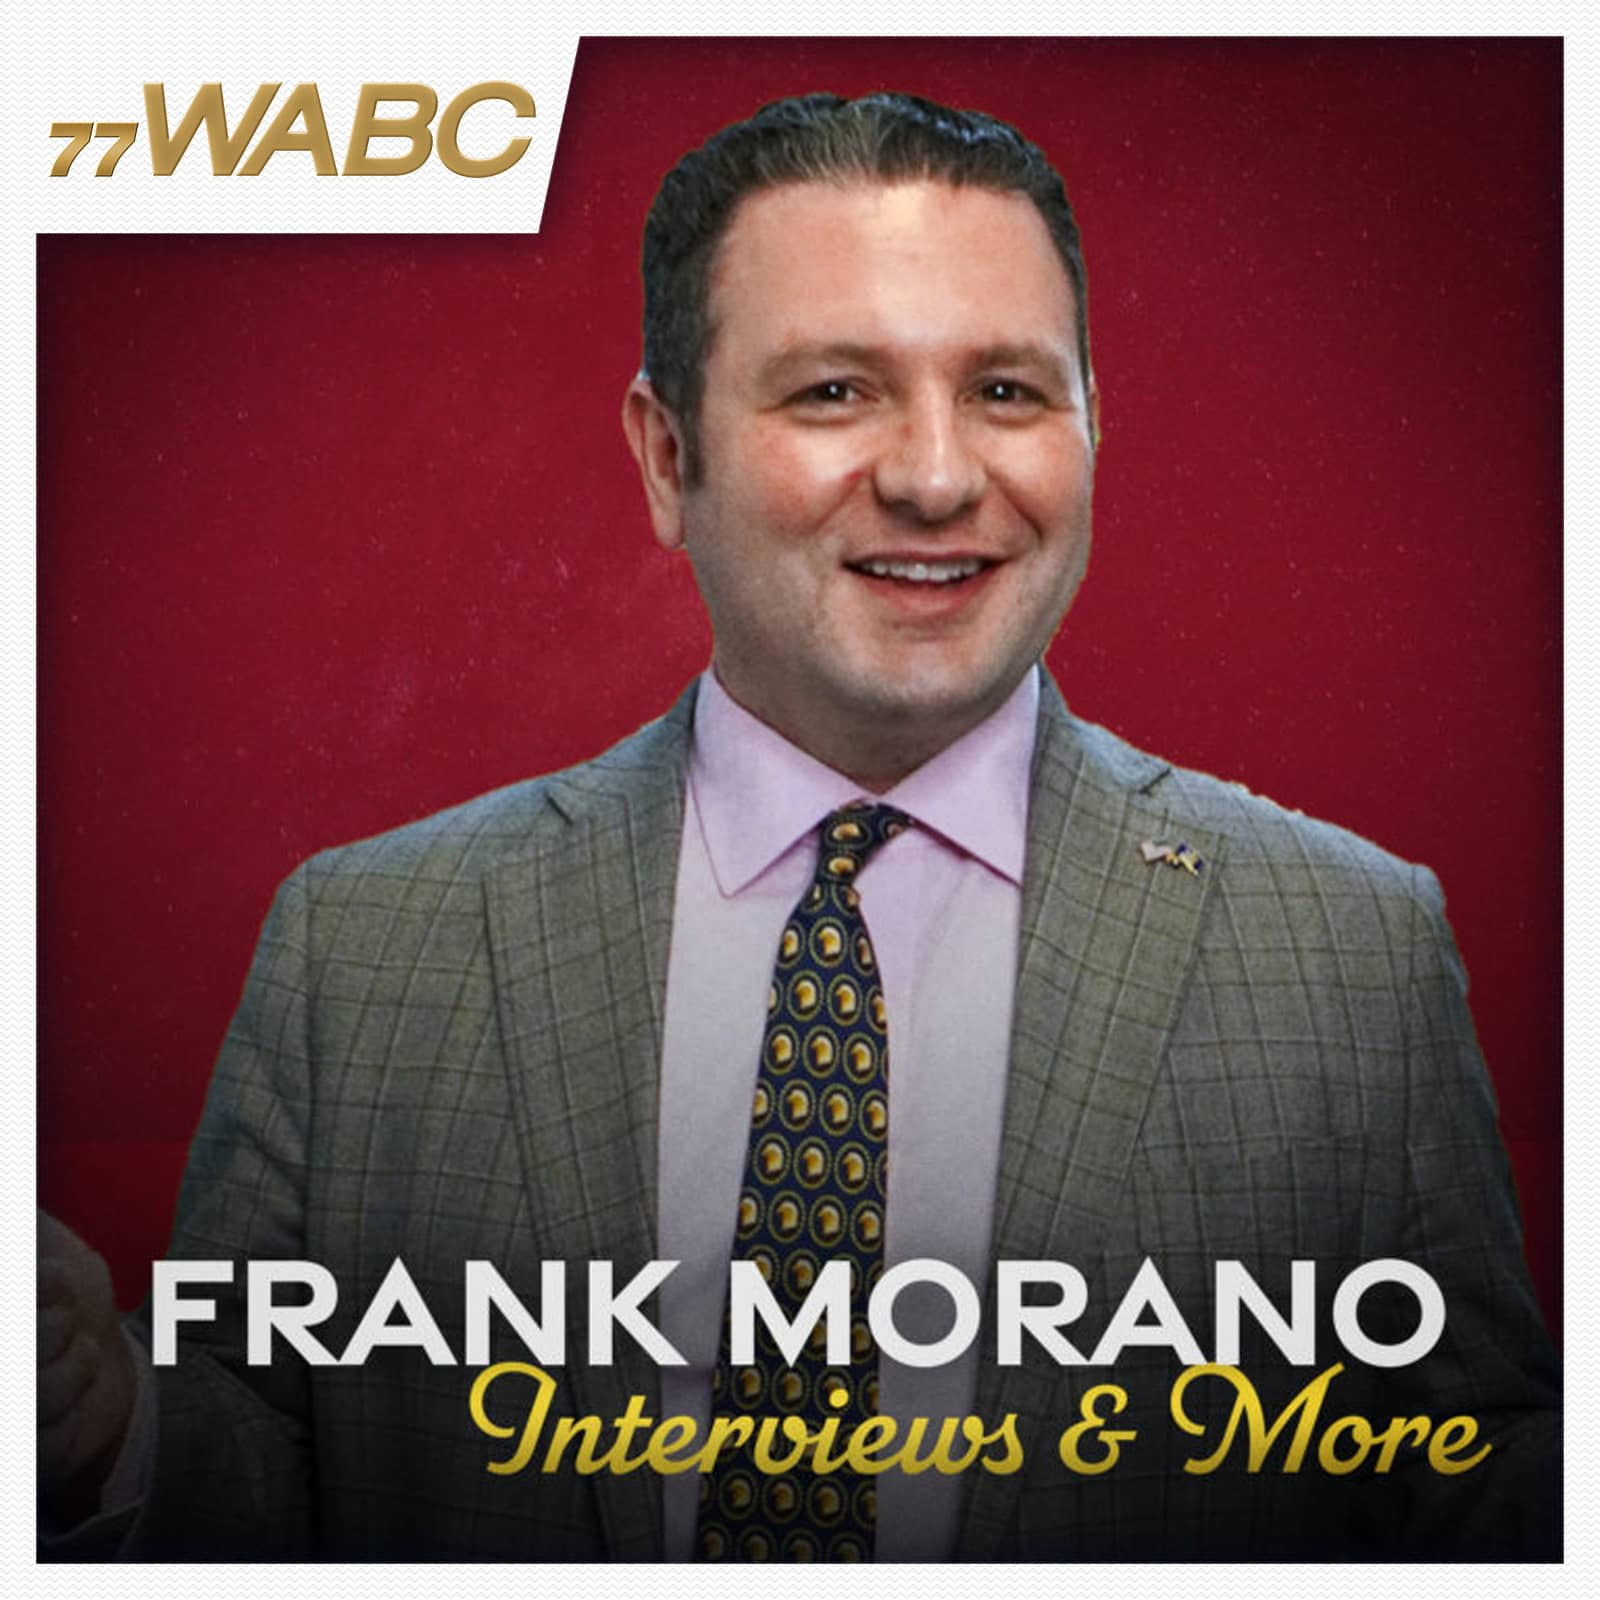 frank-morano-interviews-and-more-podcast-new-logo76650